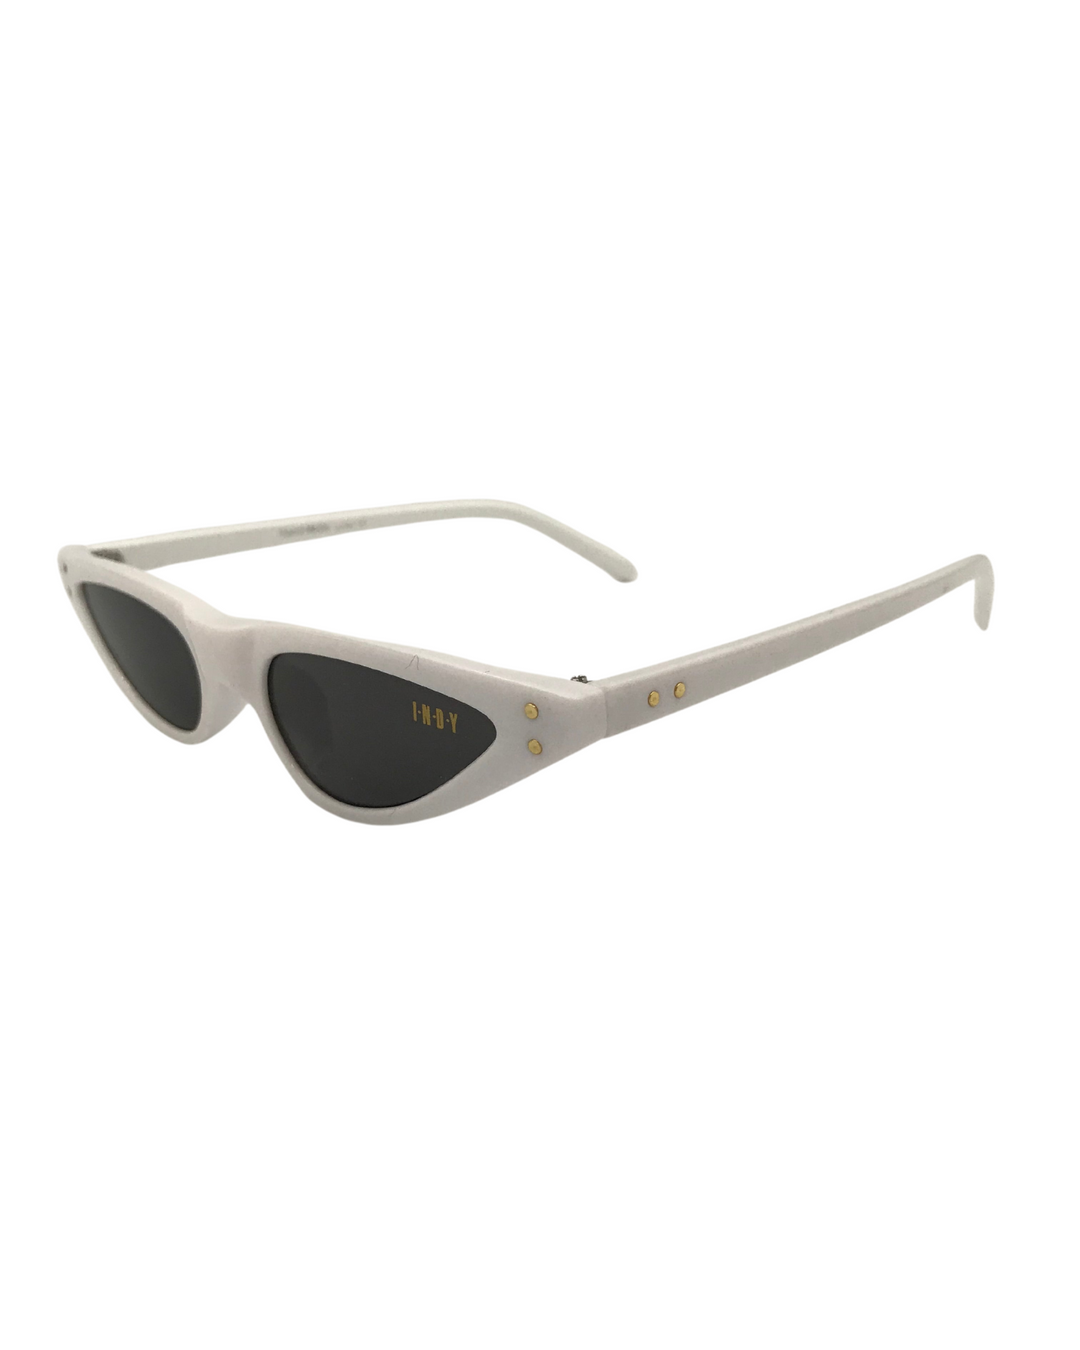 White and Black Slim Lens Sunglasses